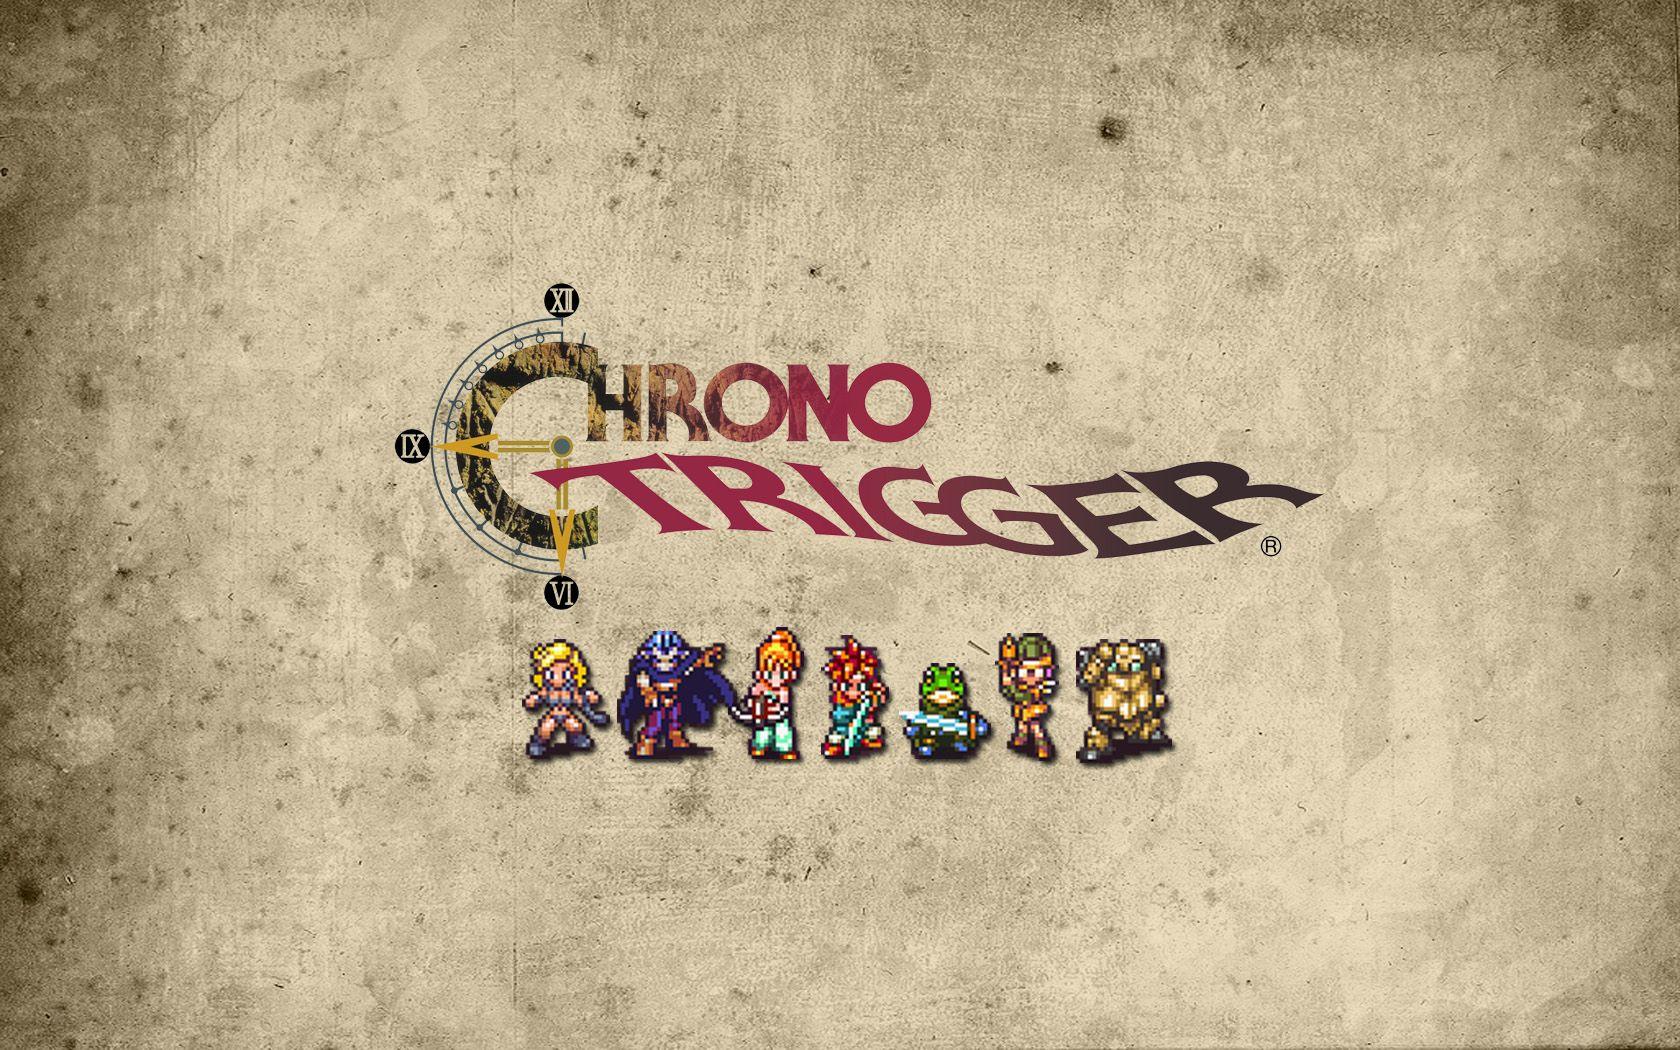 My Chrono Trigger Wallpaper